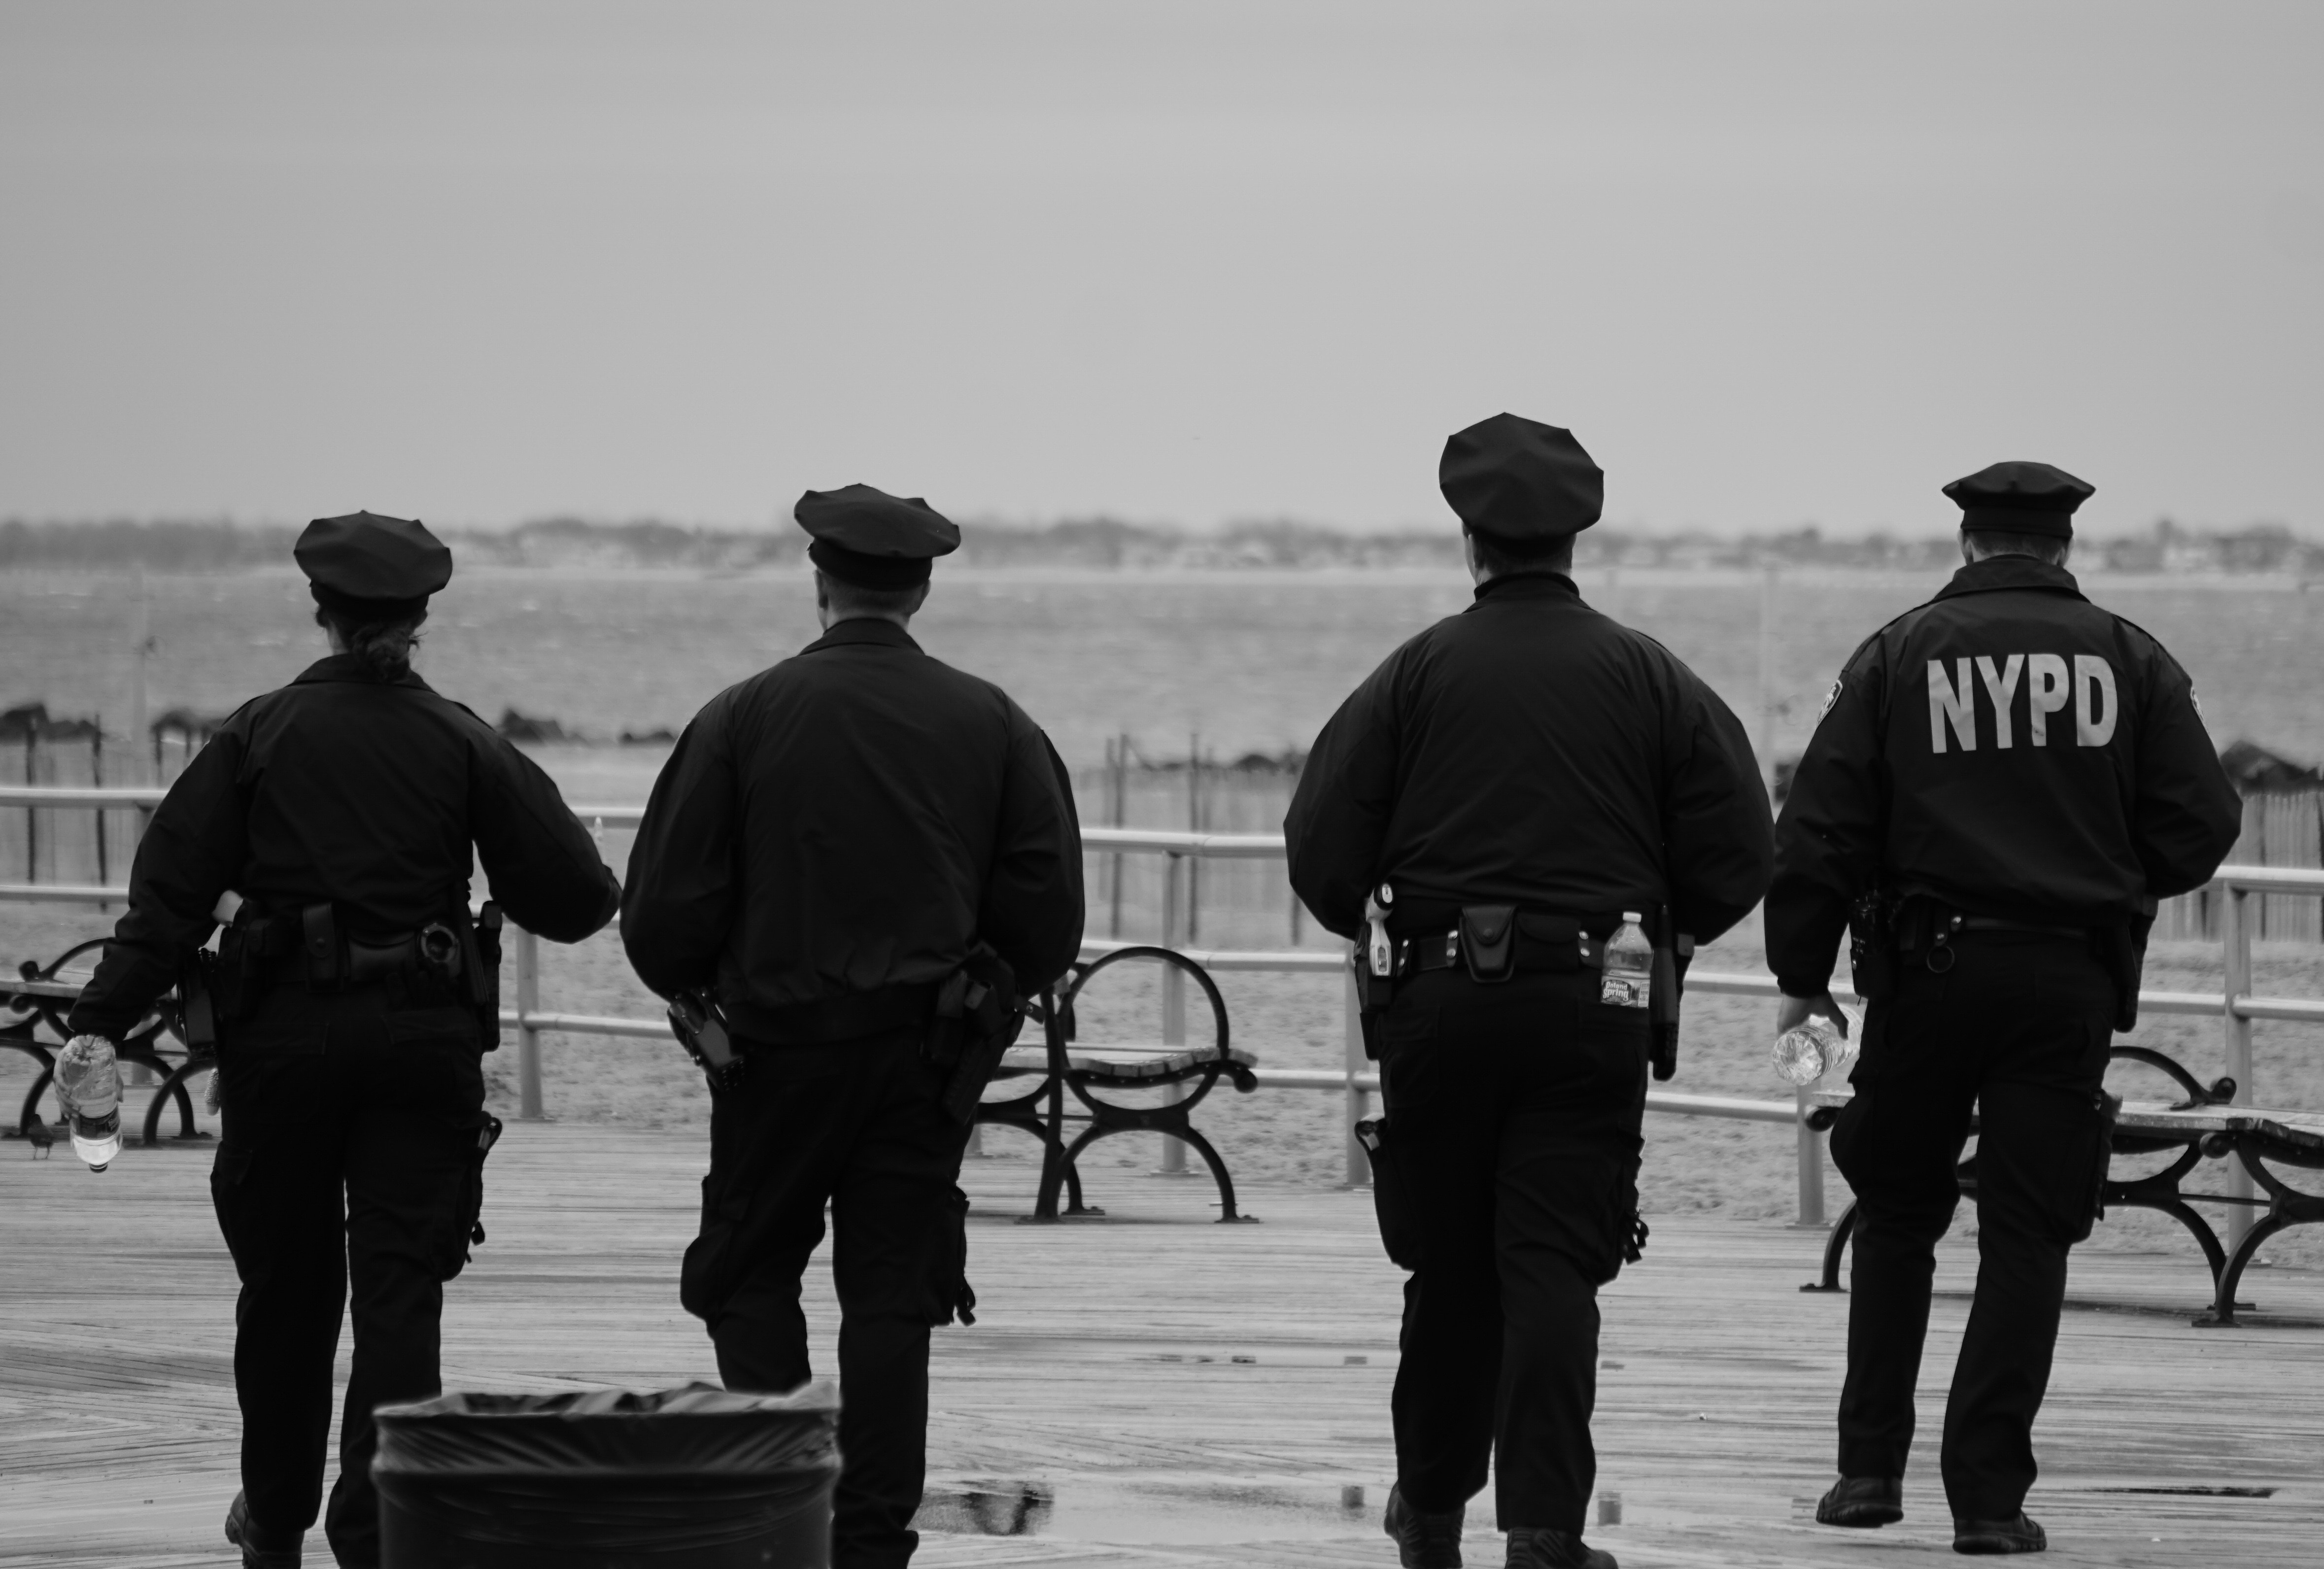 Four New York Policemen walking the Beat